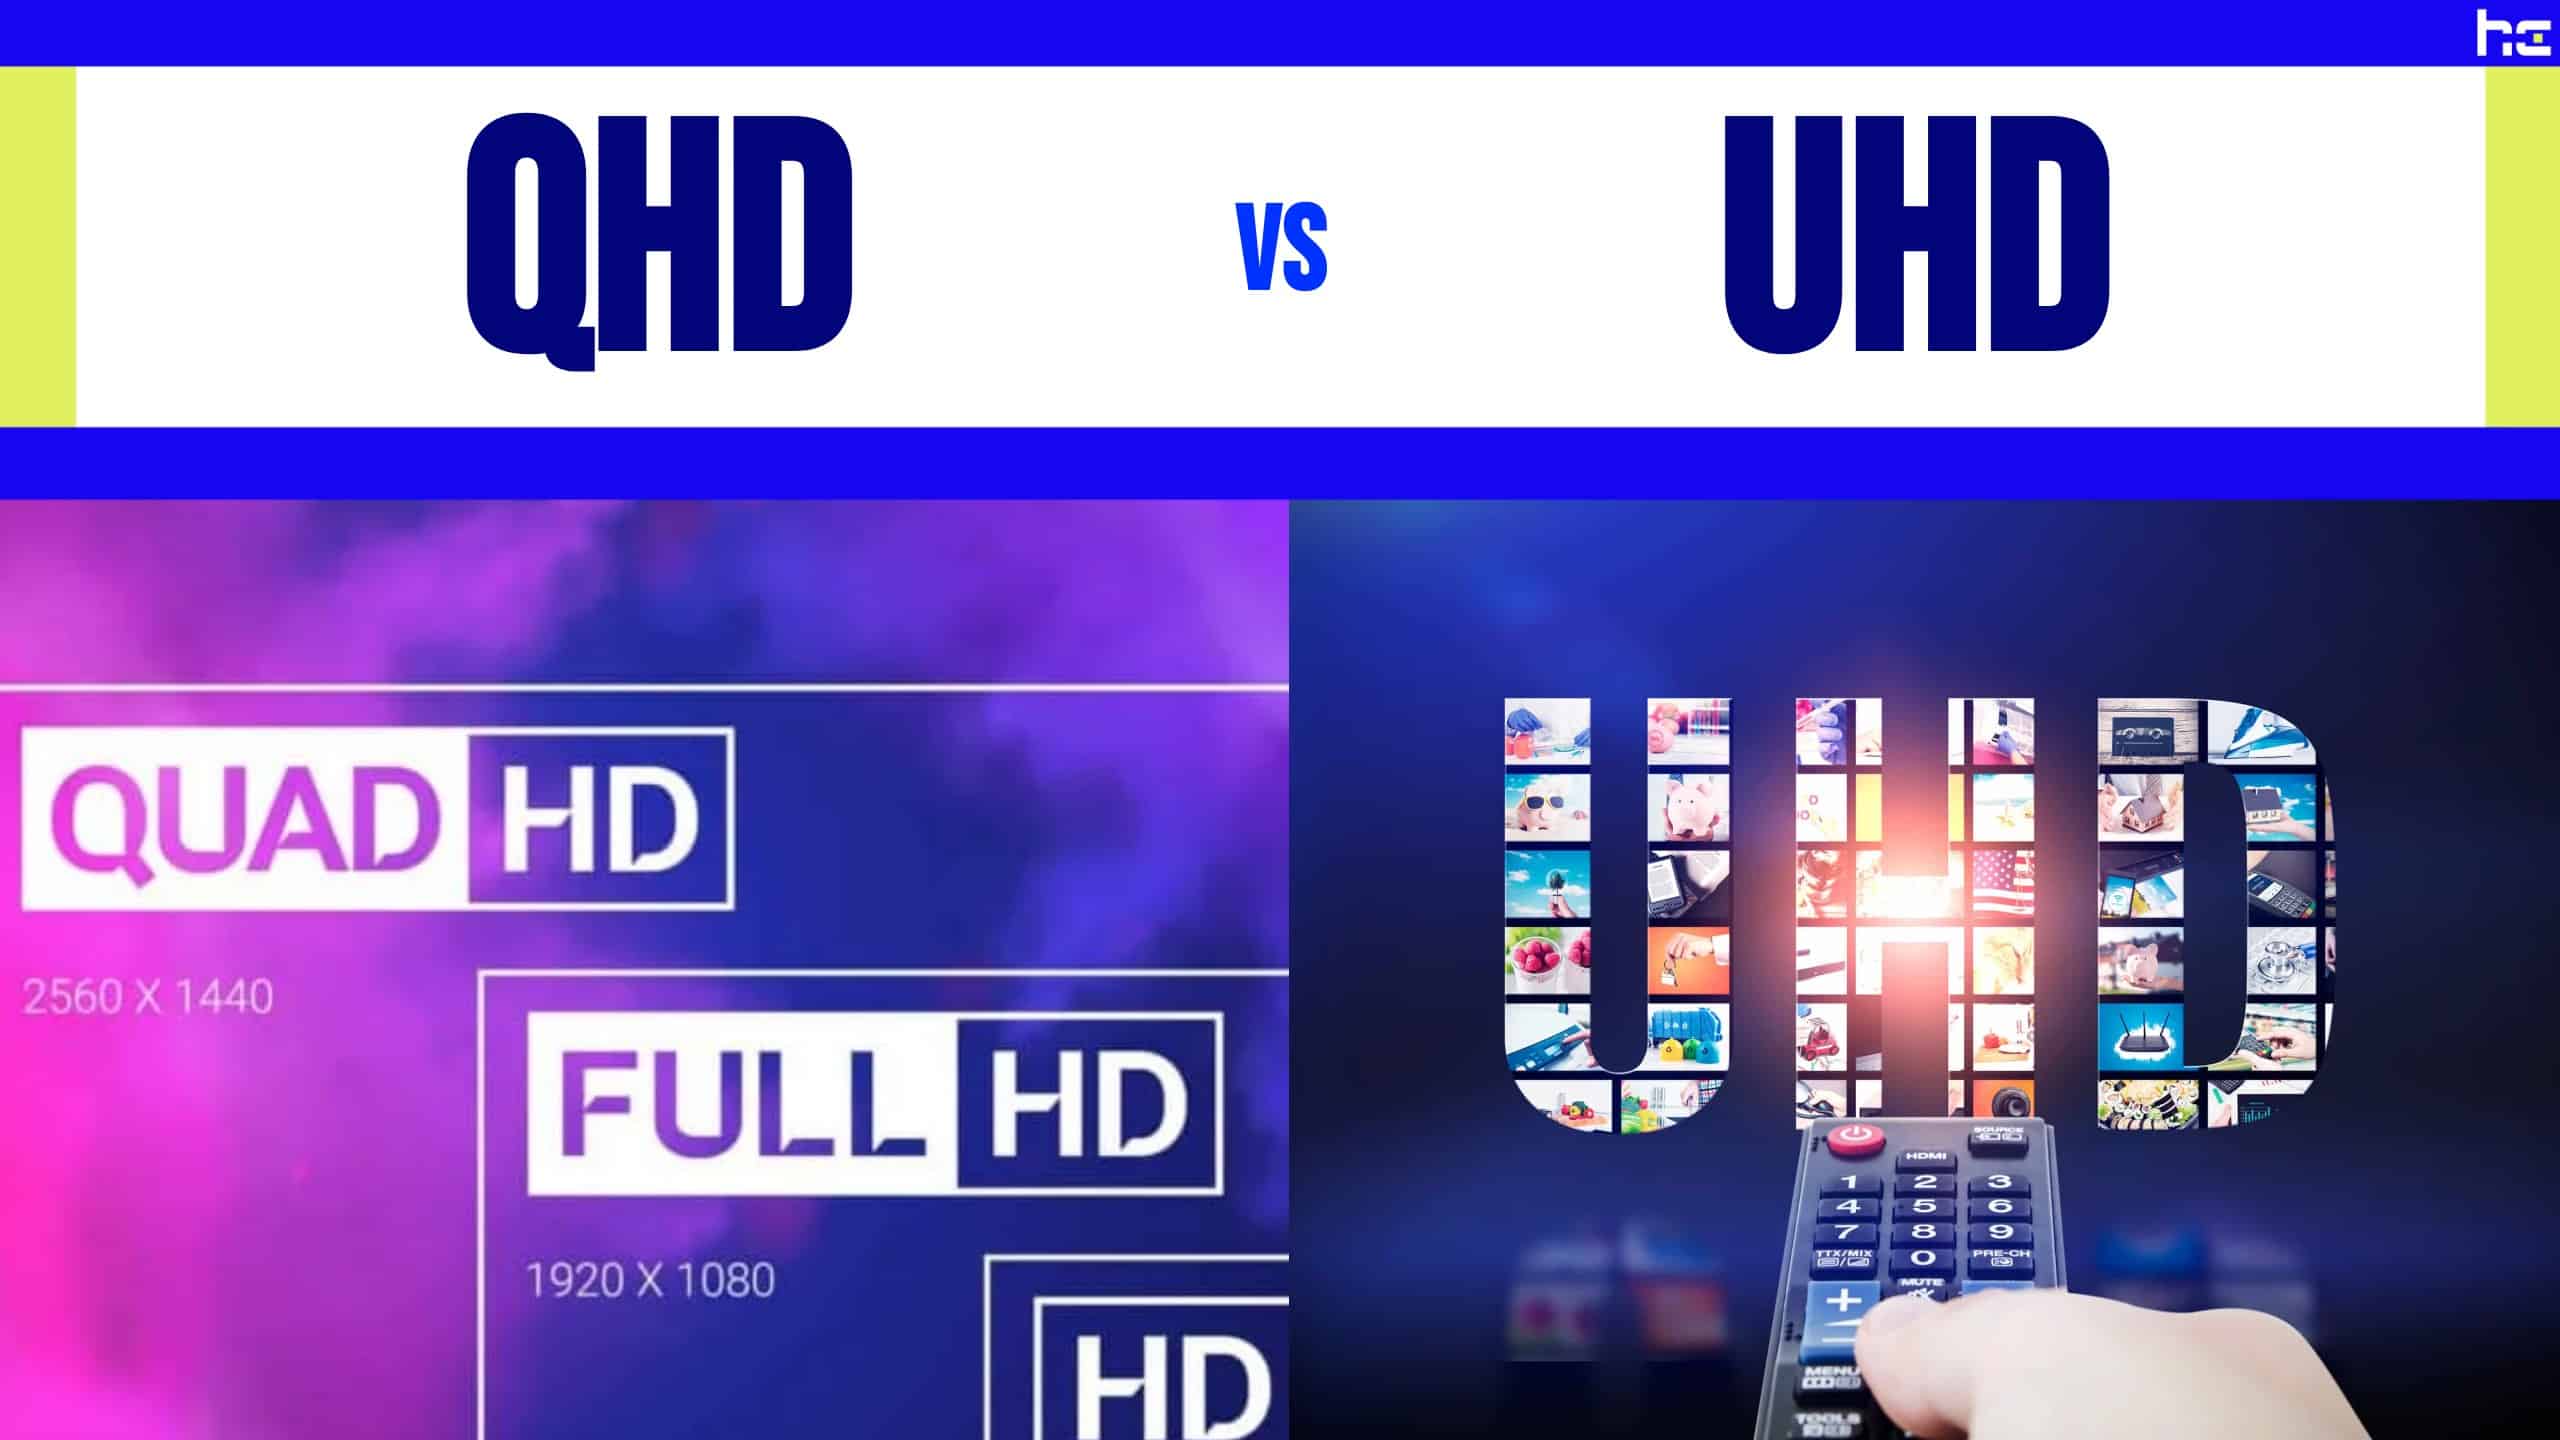 QHD vs UHD featured image